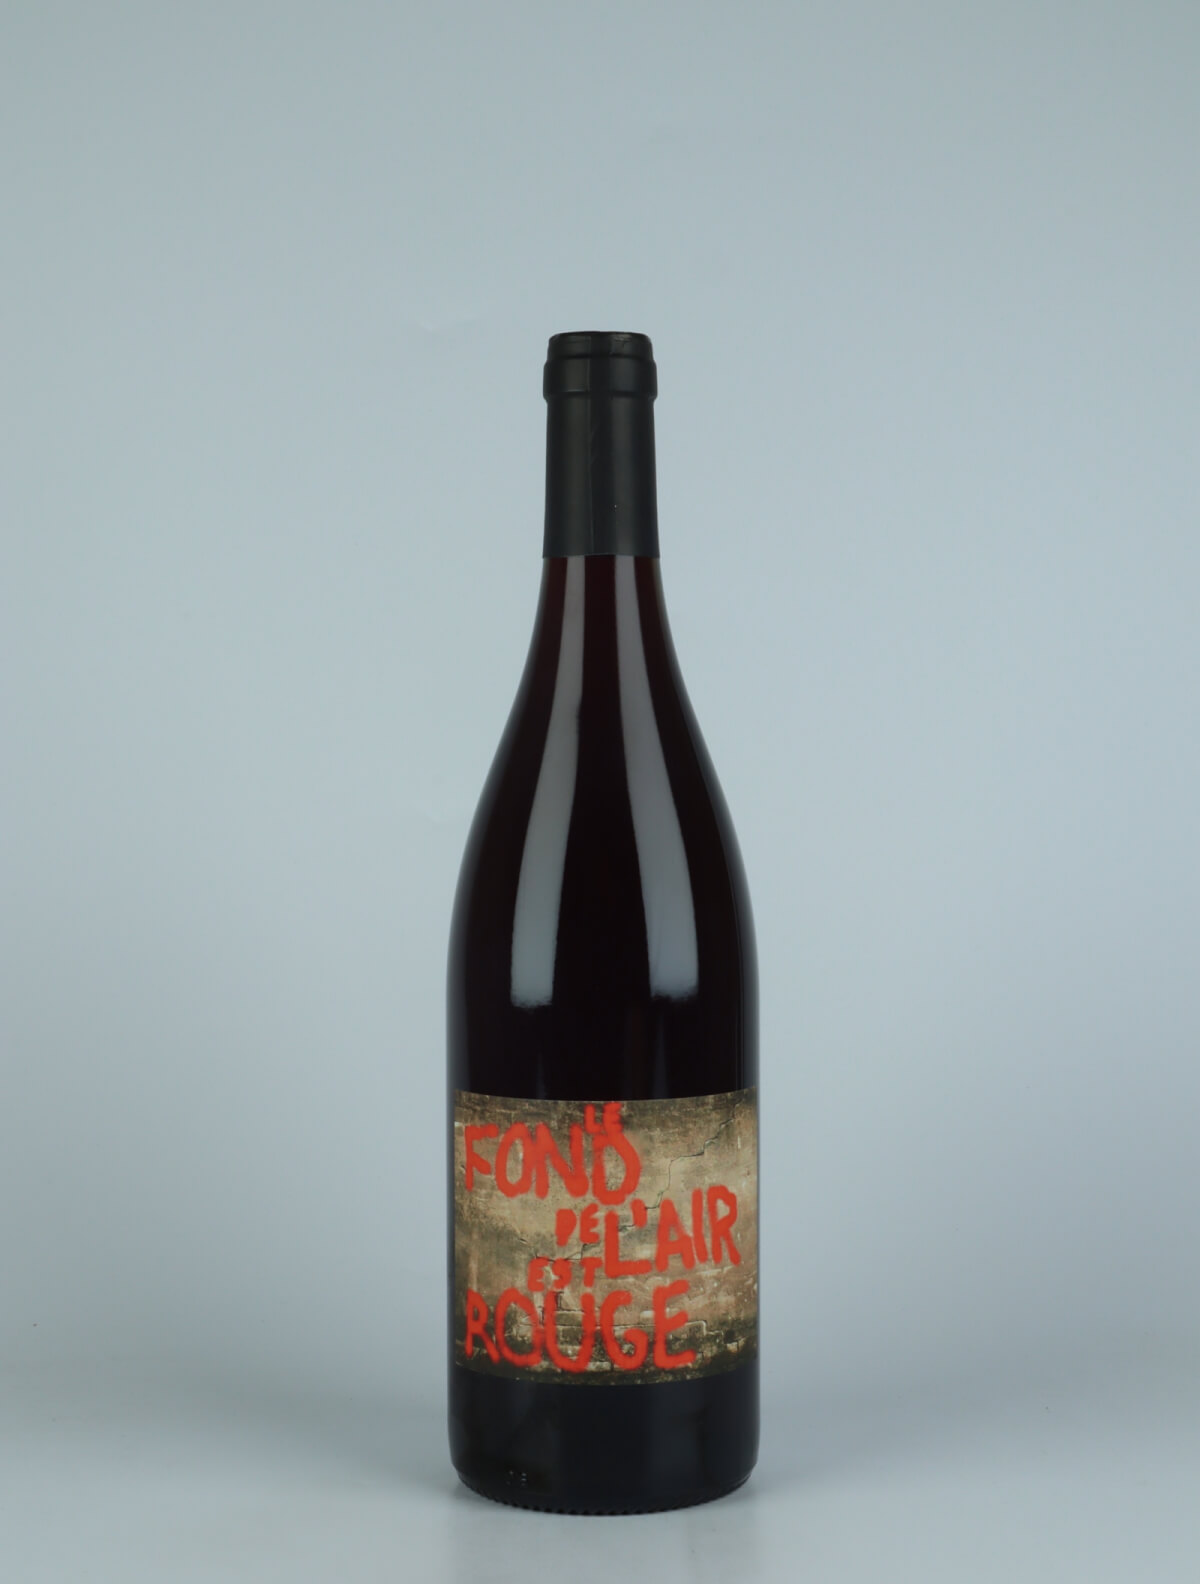 A bottle 2022 Le Fond de l'Air Est Rouge Red wine from Les Foulards Rouges, Languedoc in France